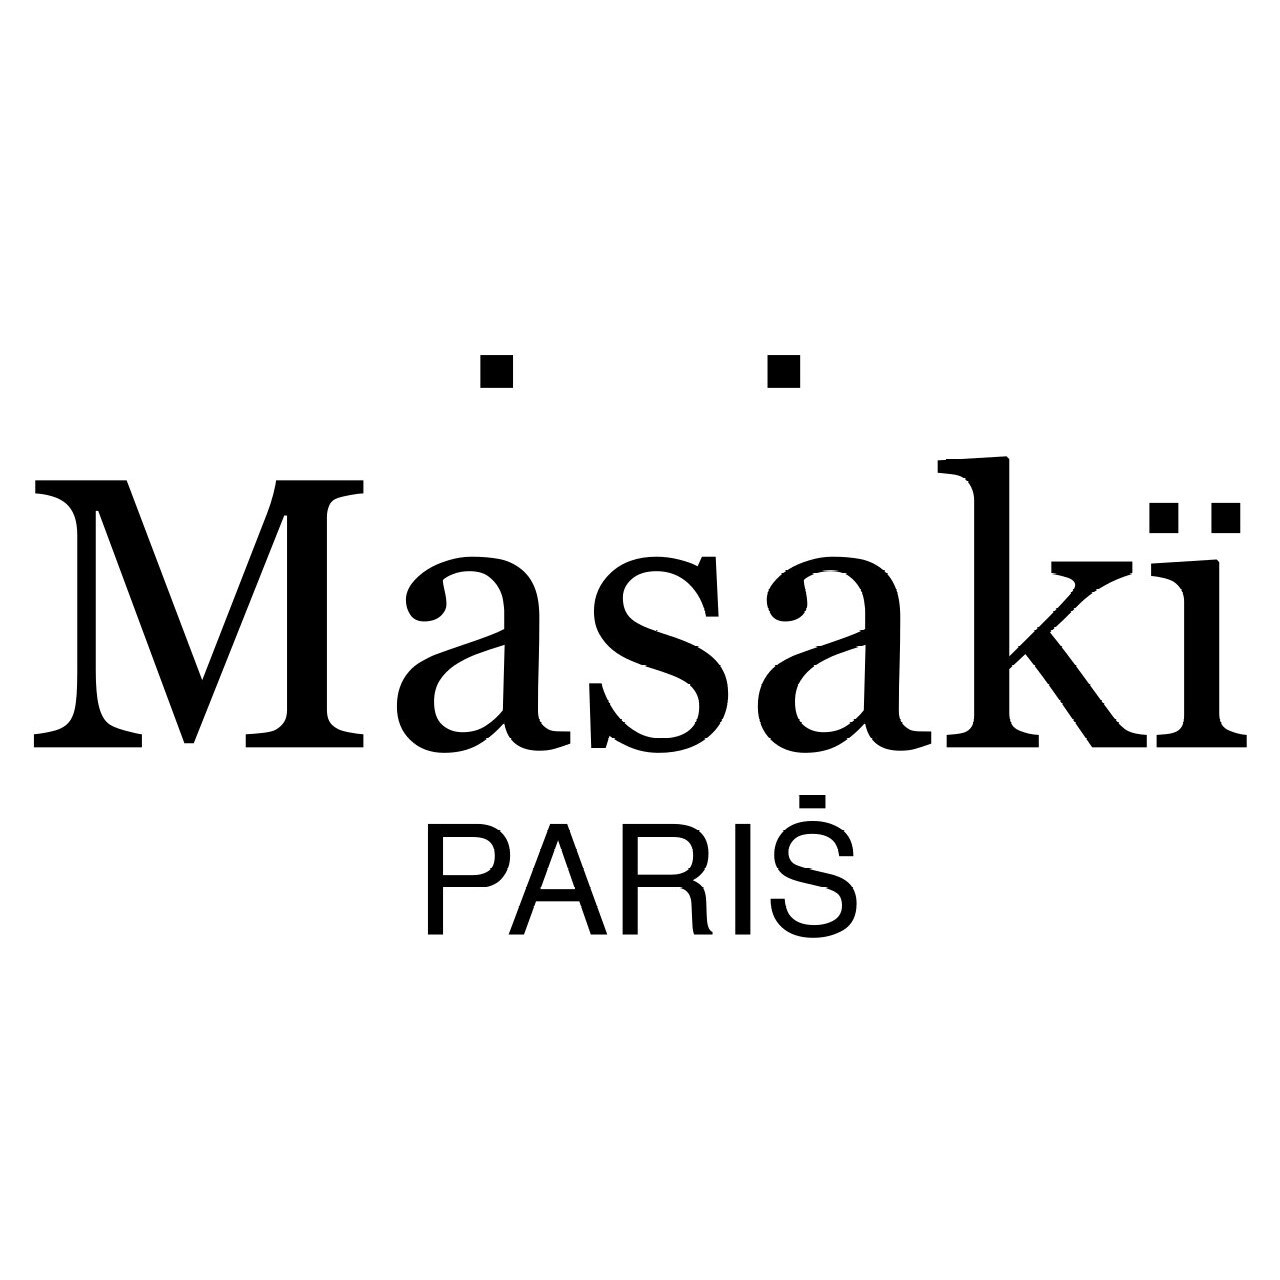 Женские духи Masaki Matsushima